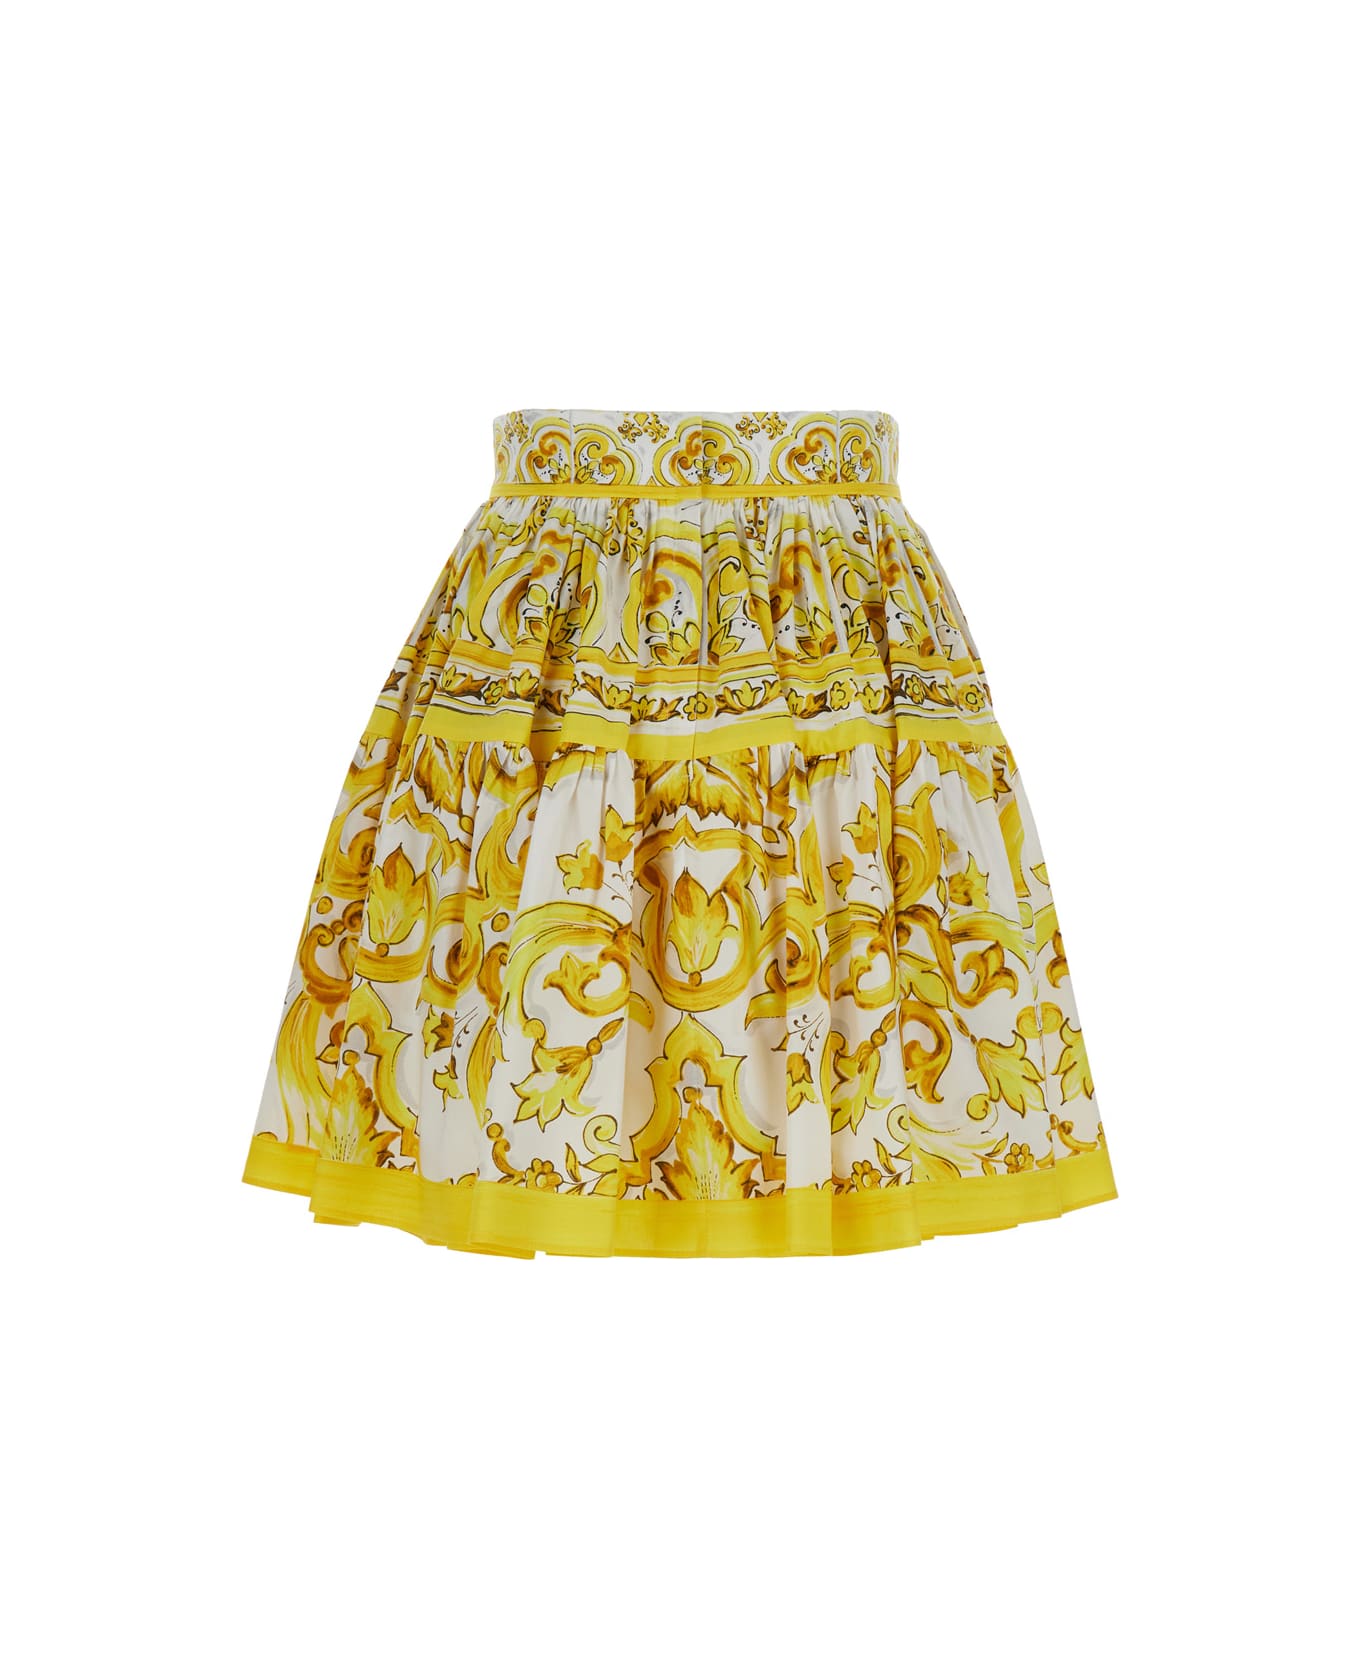 Dolce & Gabbana Yellow Round Miniskirt With Majolica Print In Cotton Woman - Yellow